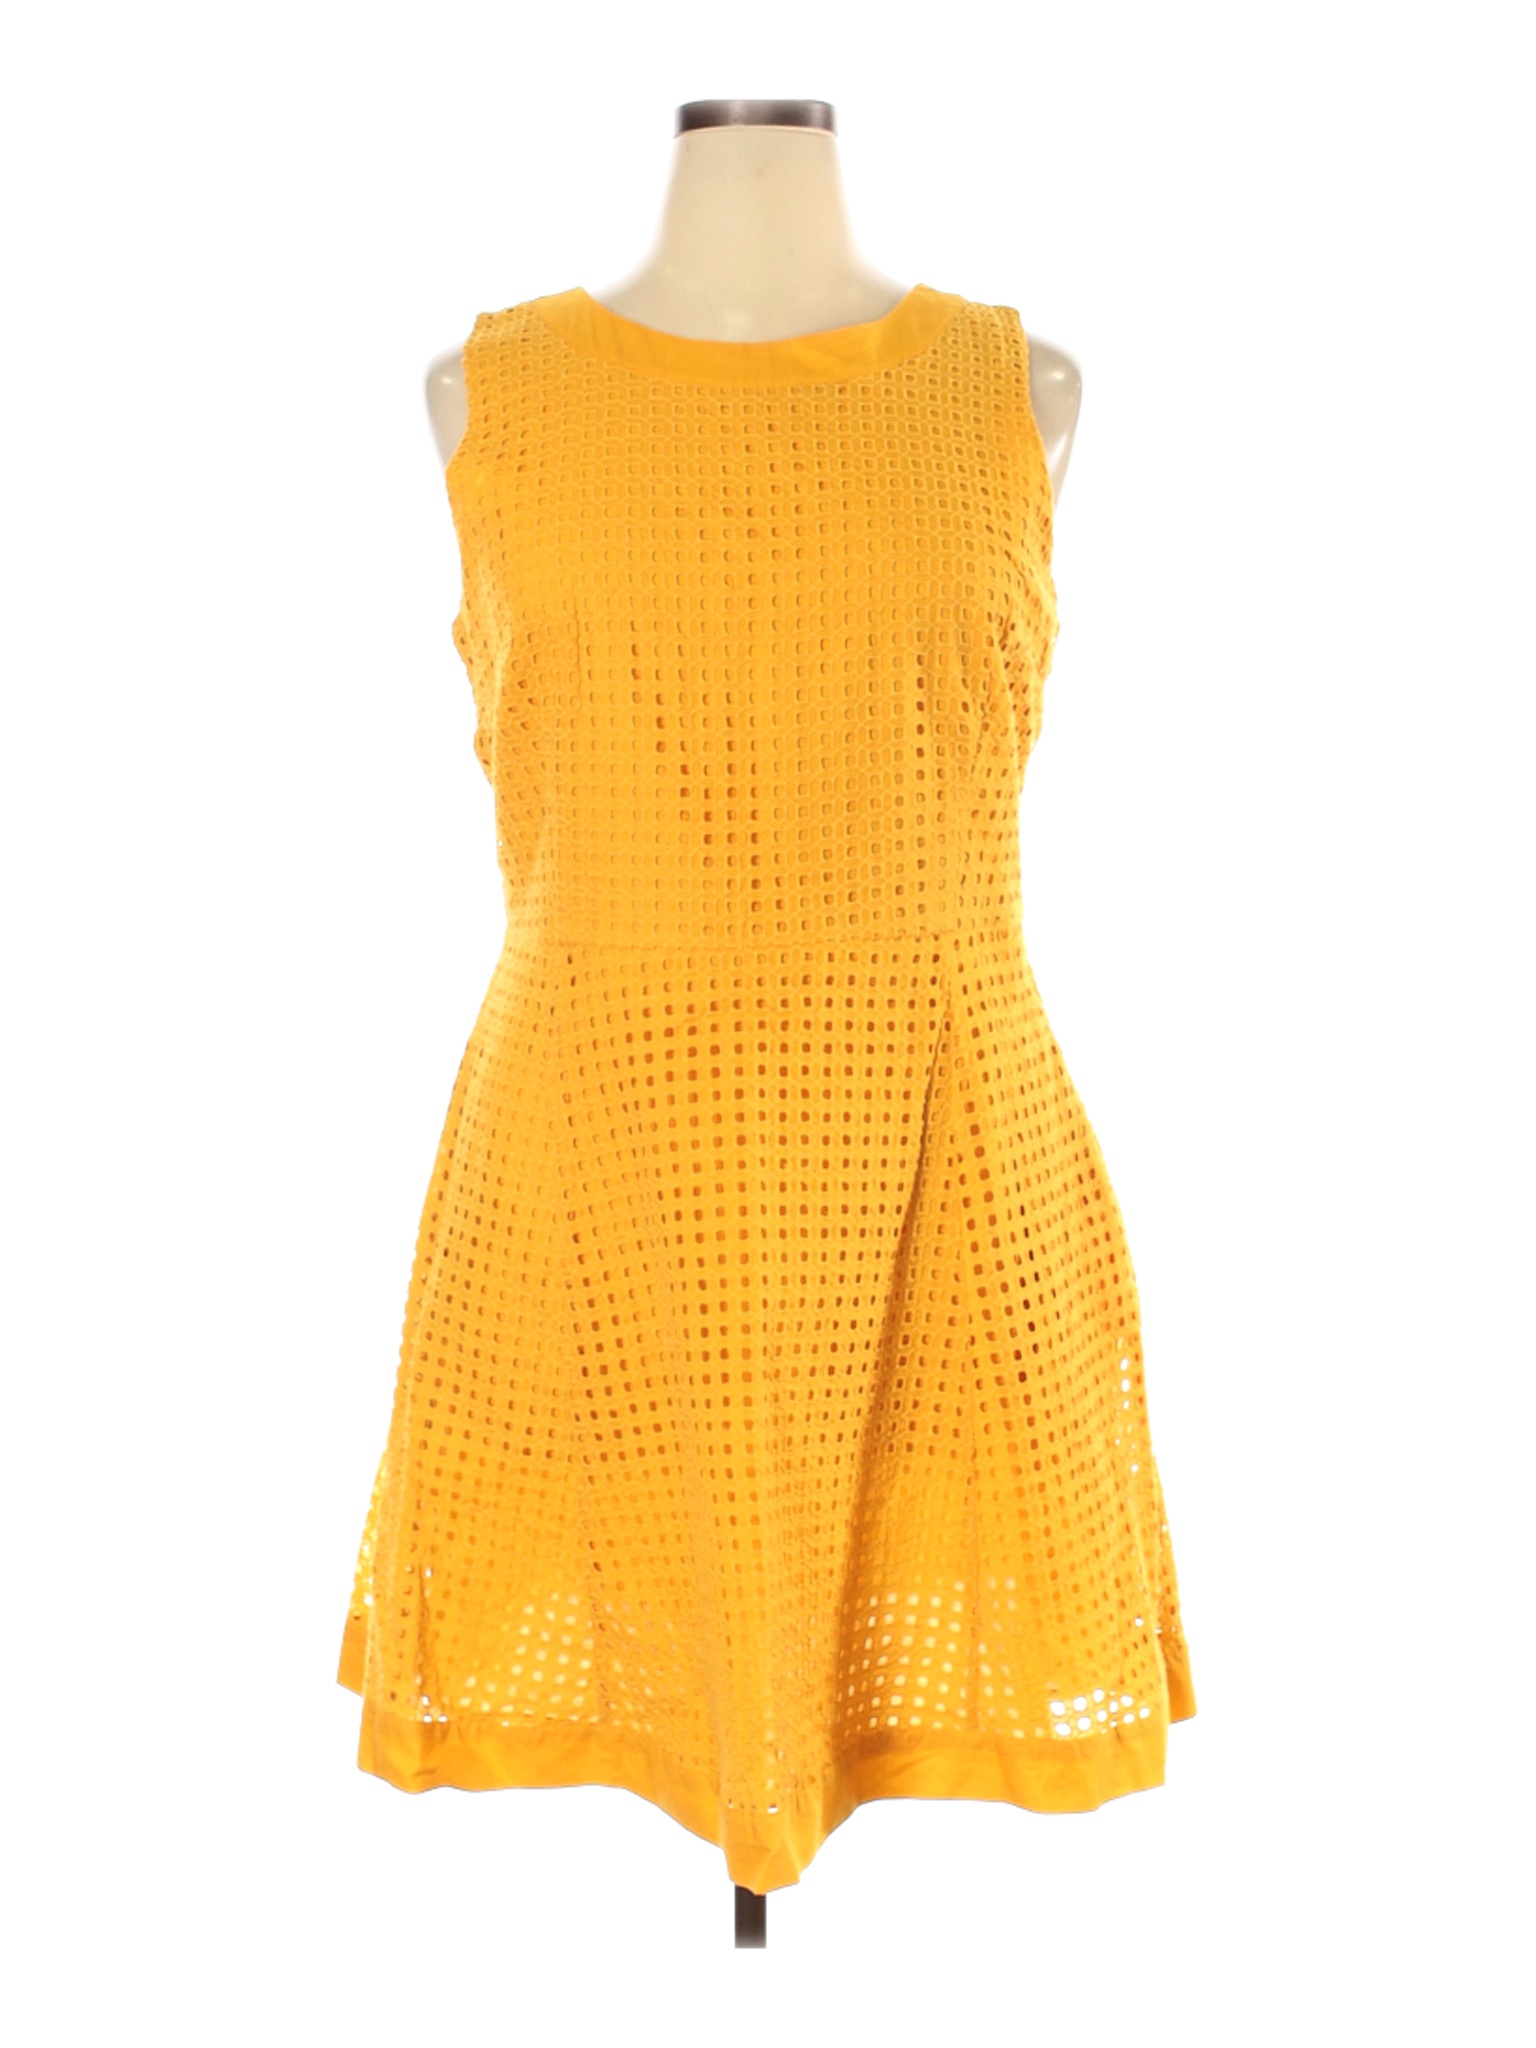 NWT Tommy Hilfiger Women Yellow Casual Dress 16 | eBay